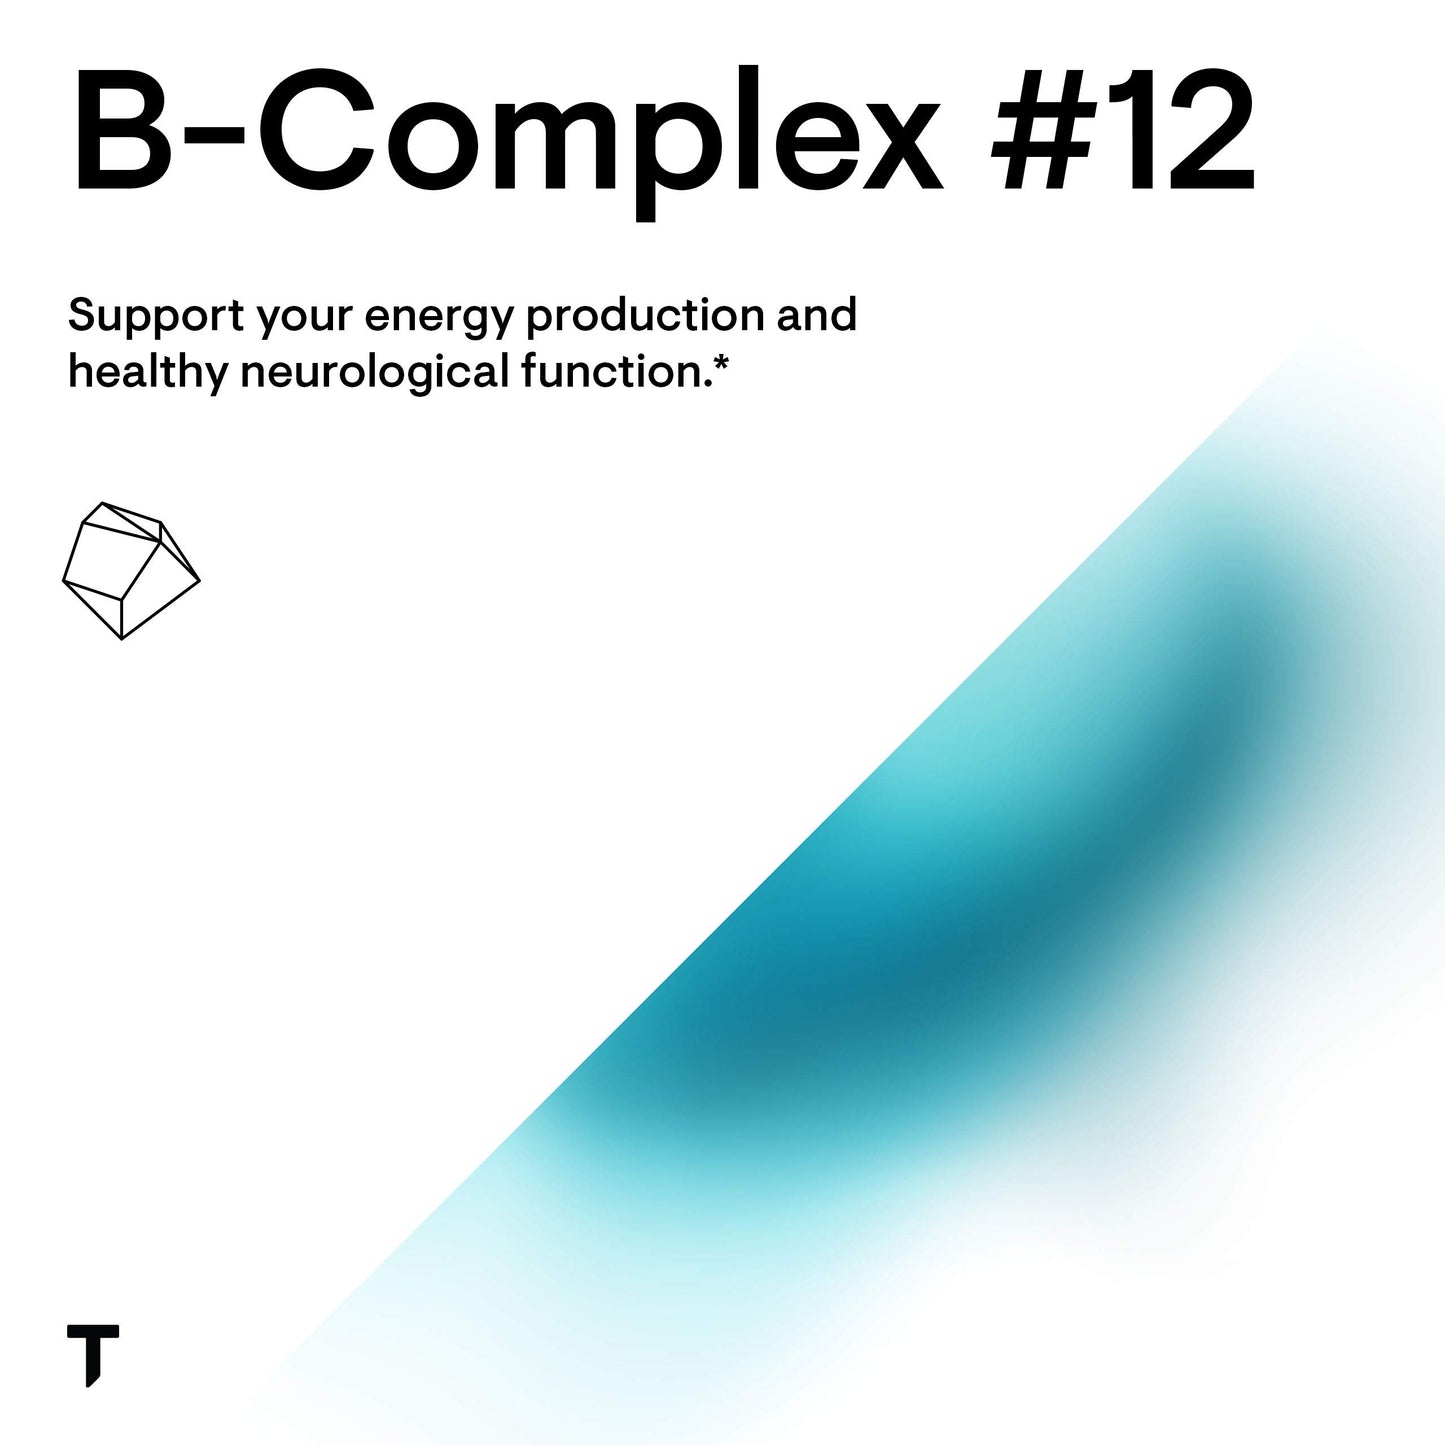 Thorne Research - B-Complex 12 - 60 Capsules